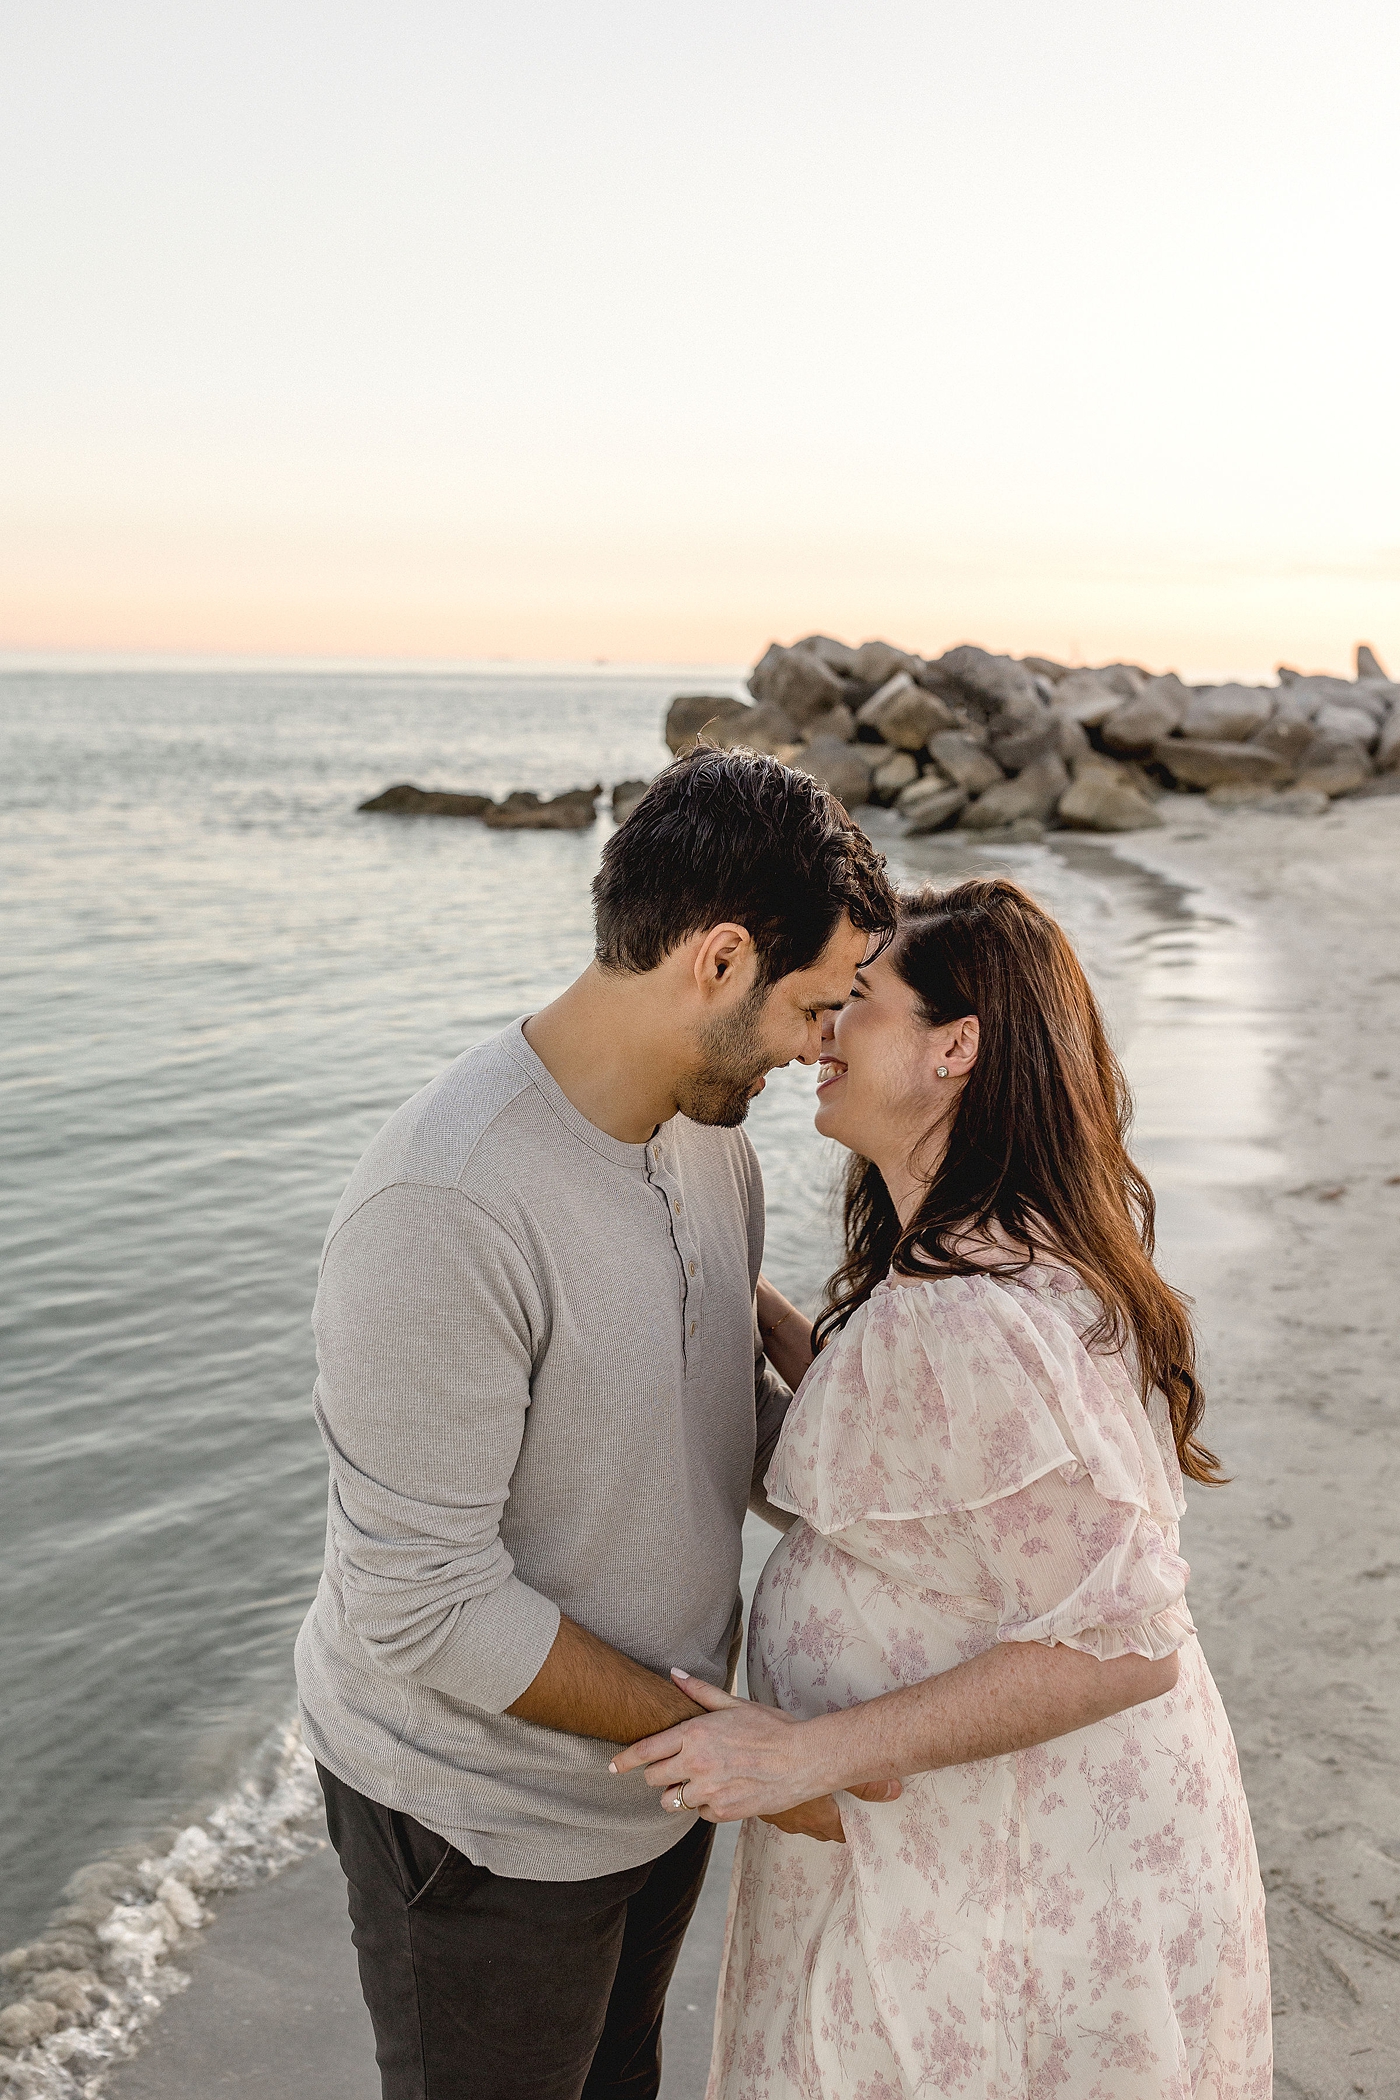 Expecting parents embrace at the shore's edge at El Farito Beach Miami FL. Photo by Ivanna Vidal Photography.